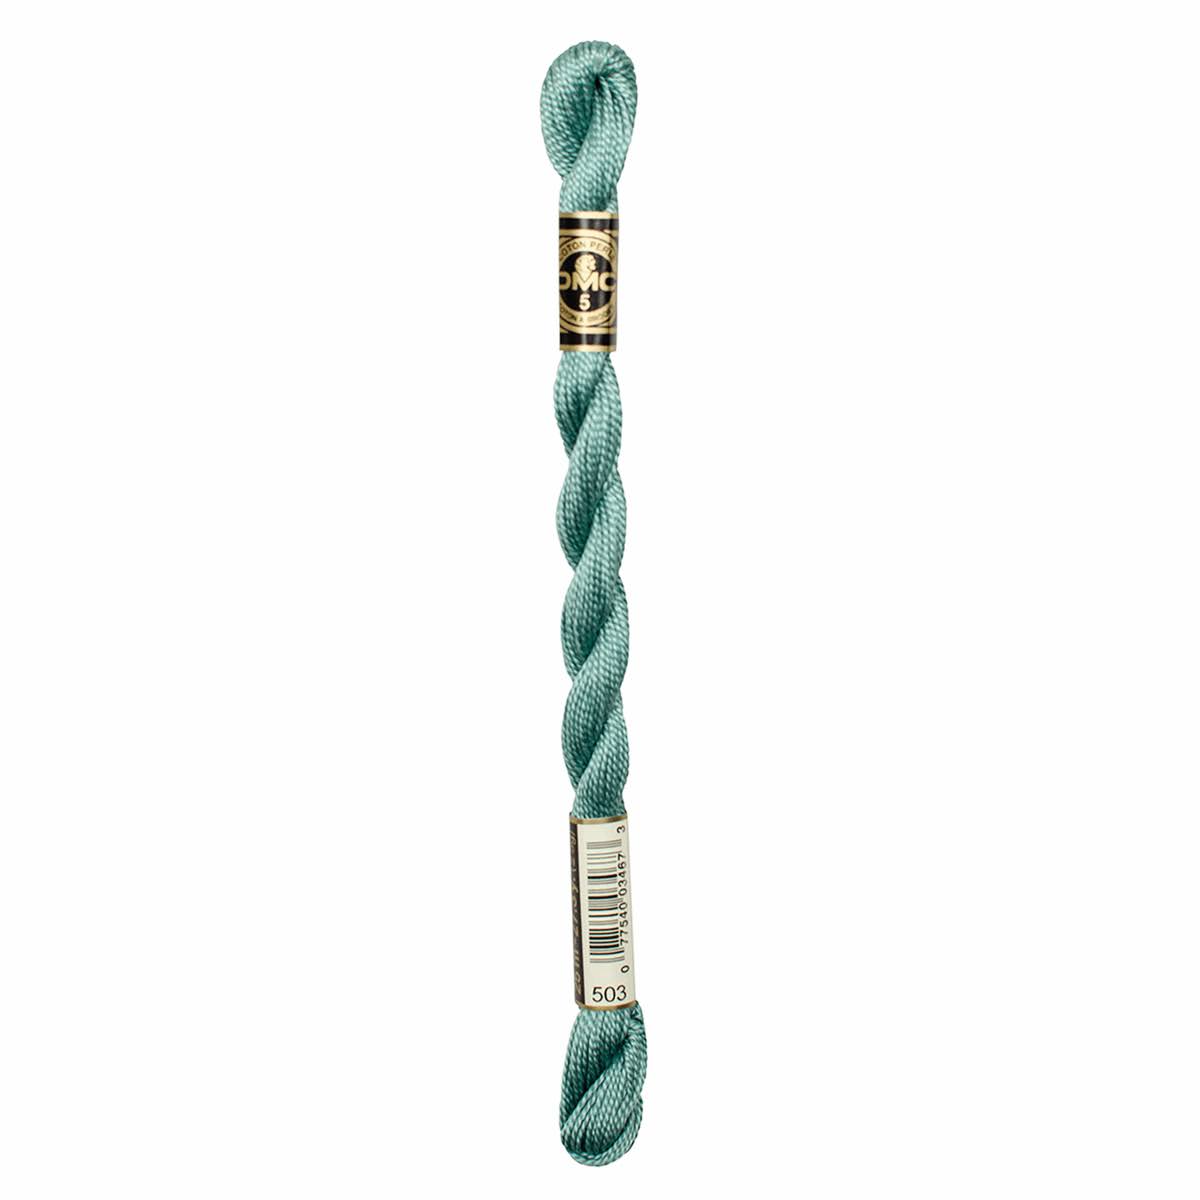 DMC Pearl Cotton Thread - Medium Blue Green, Size 5